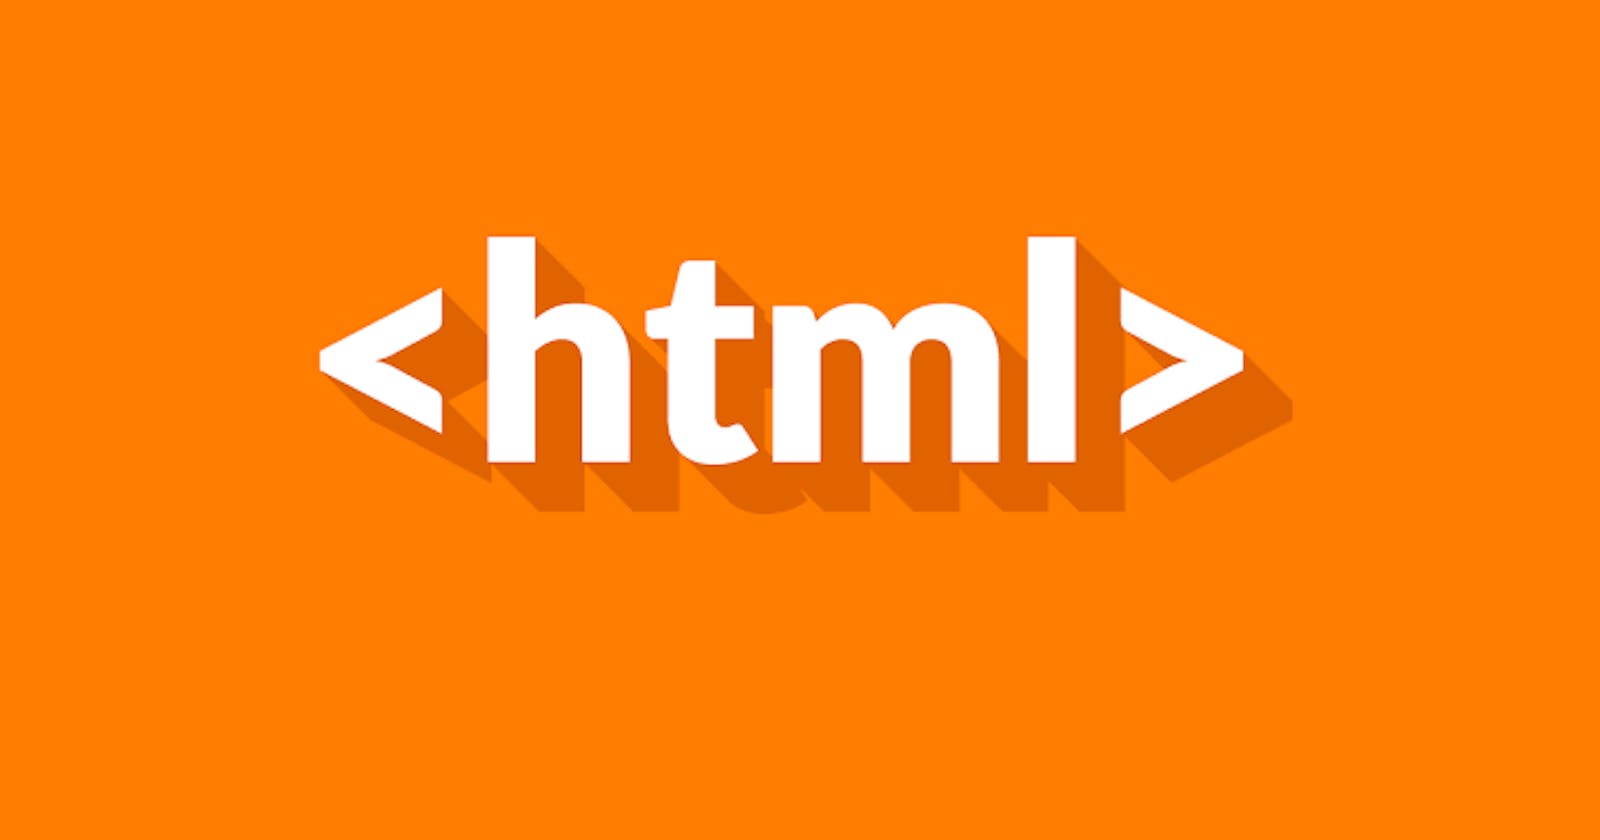 HTML: HyperText Markup Language